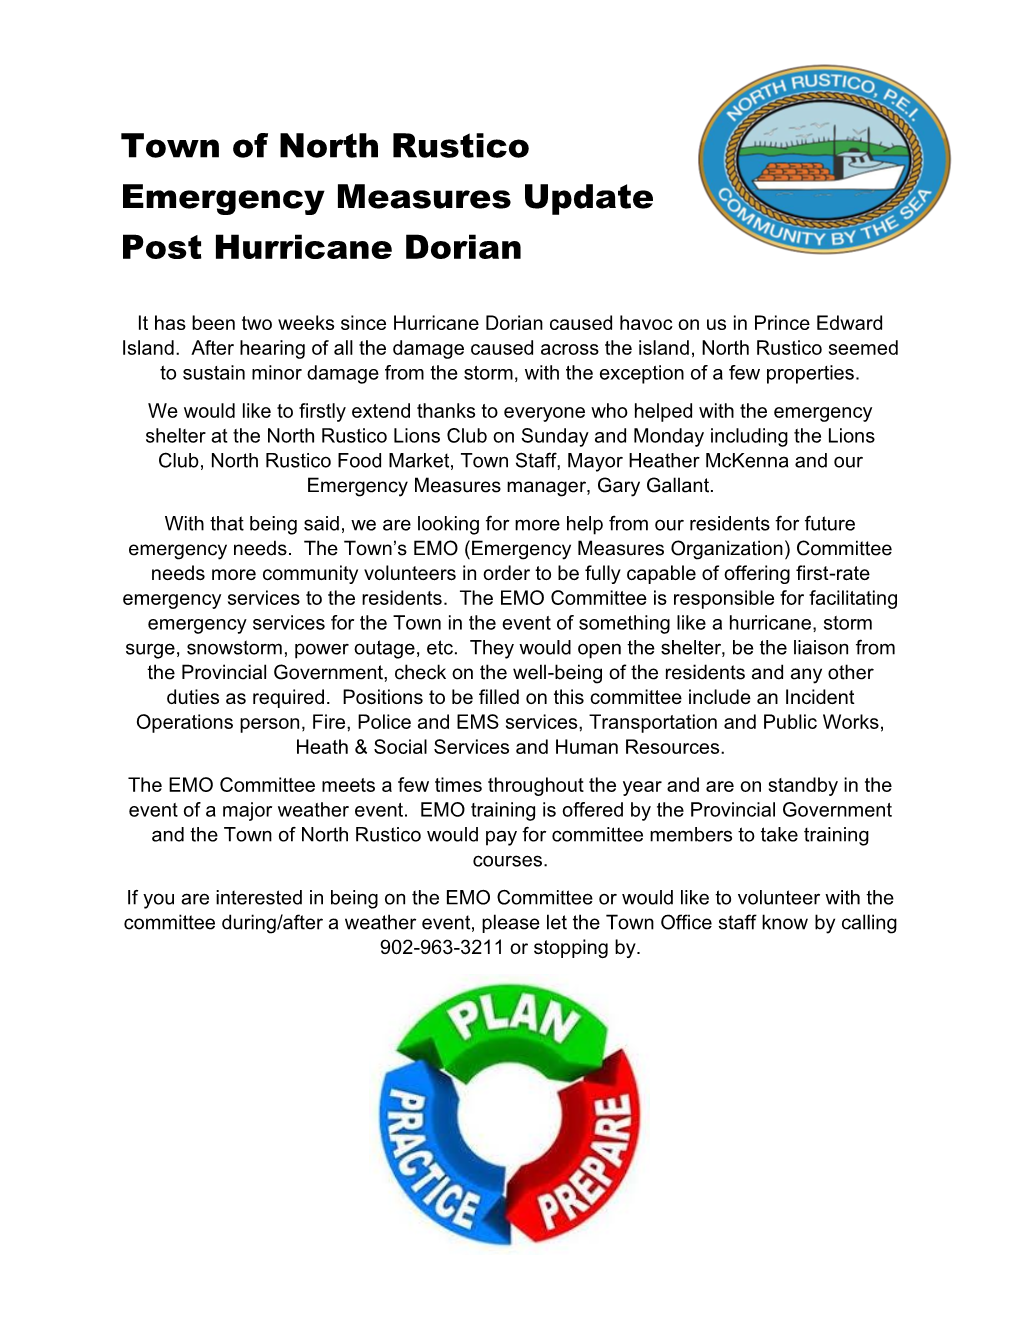 Town of North Rustico Emergency Measures Update Post Hurricane Dorian